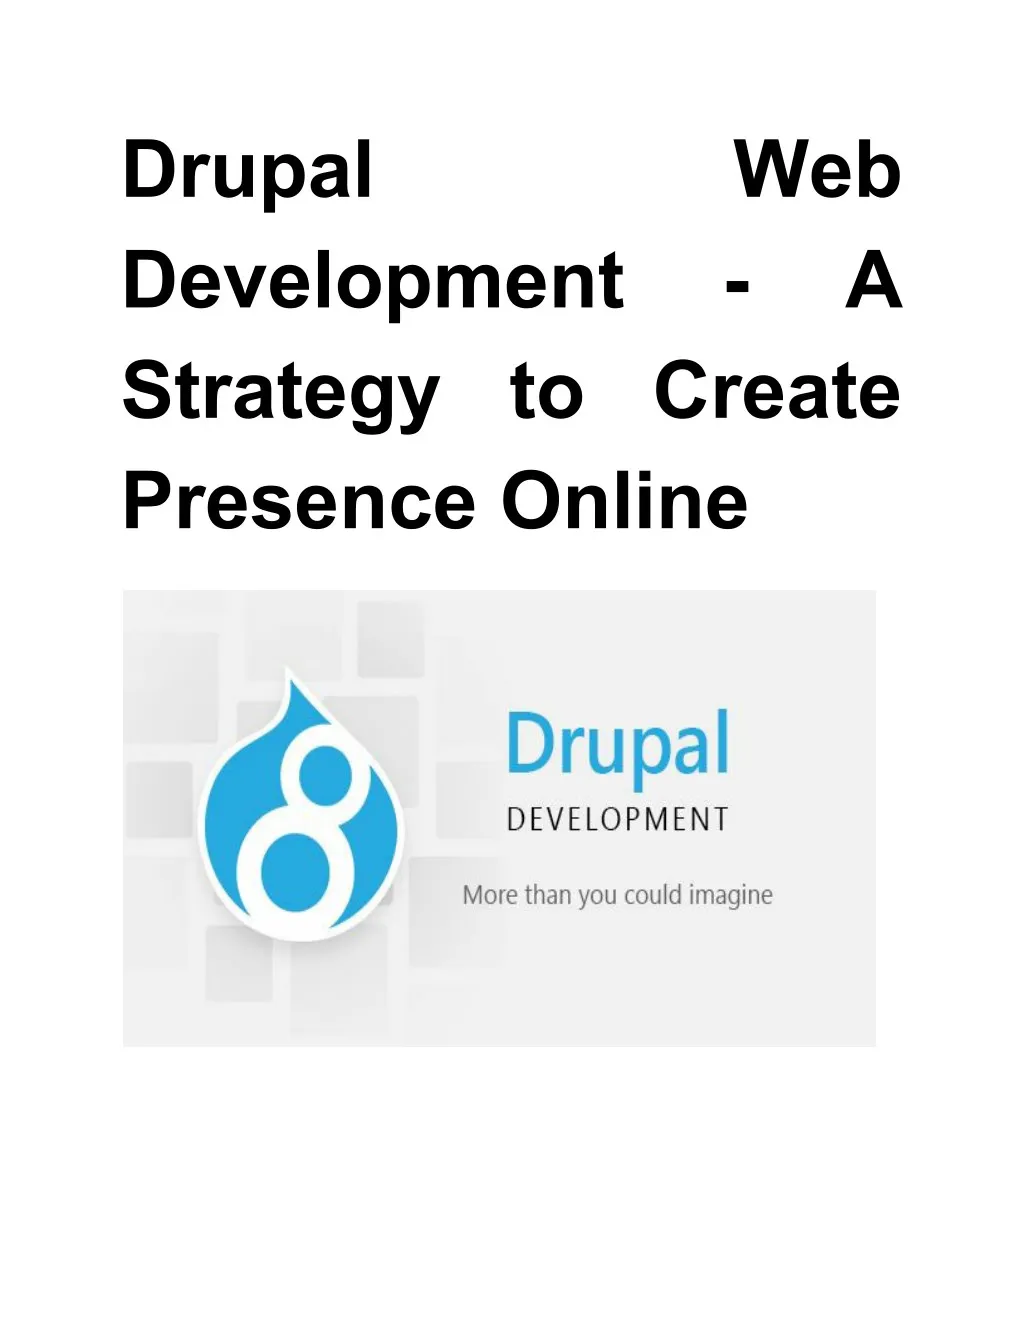 drupal development strategy to create presence